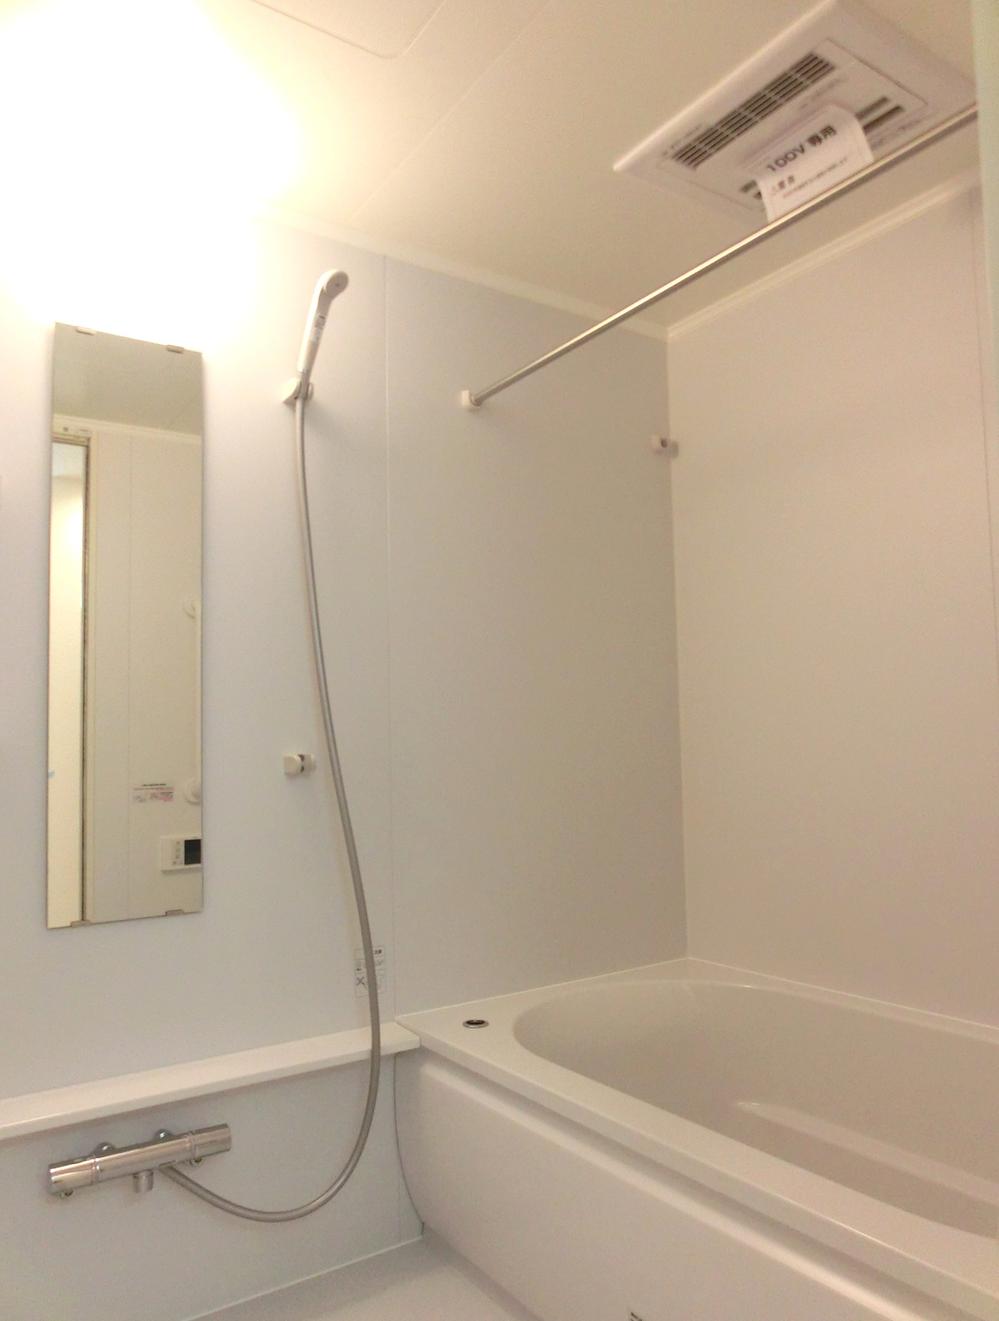 Bathroom. It is with a bathroom ventilation dryer